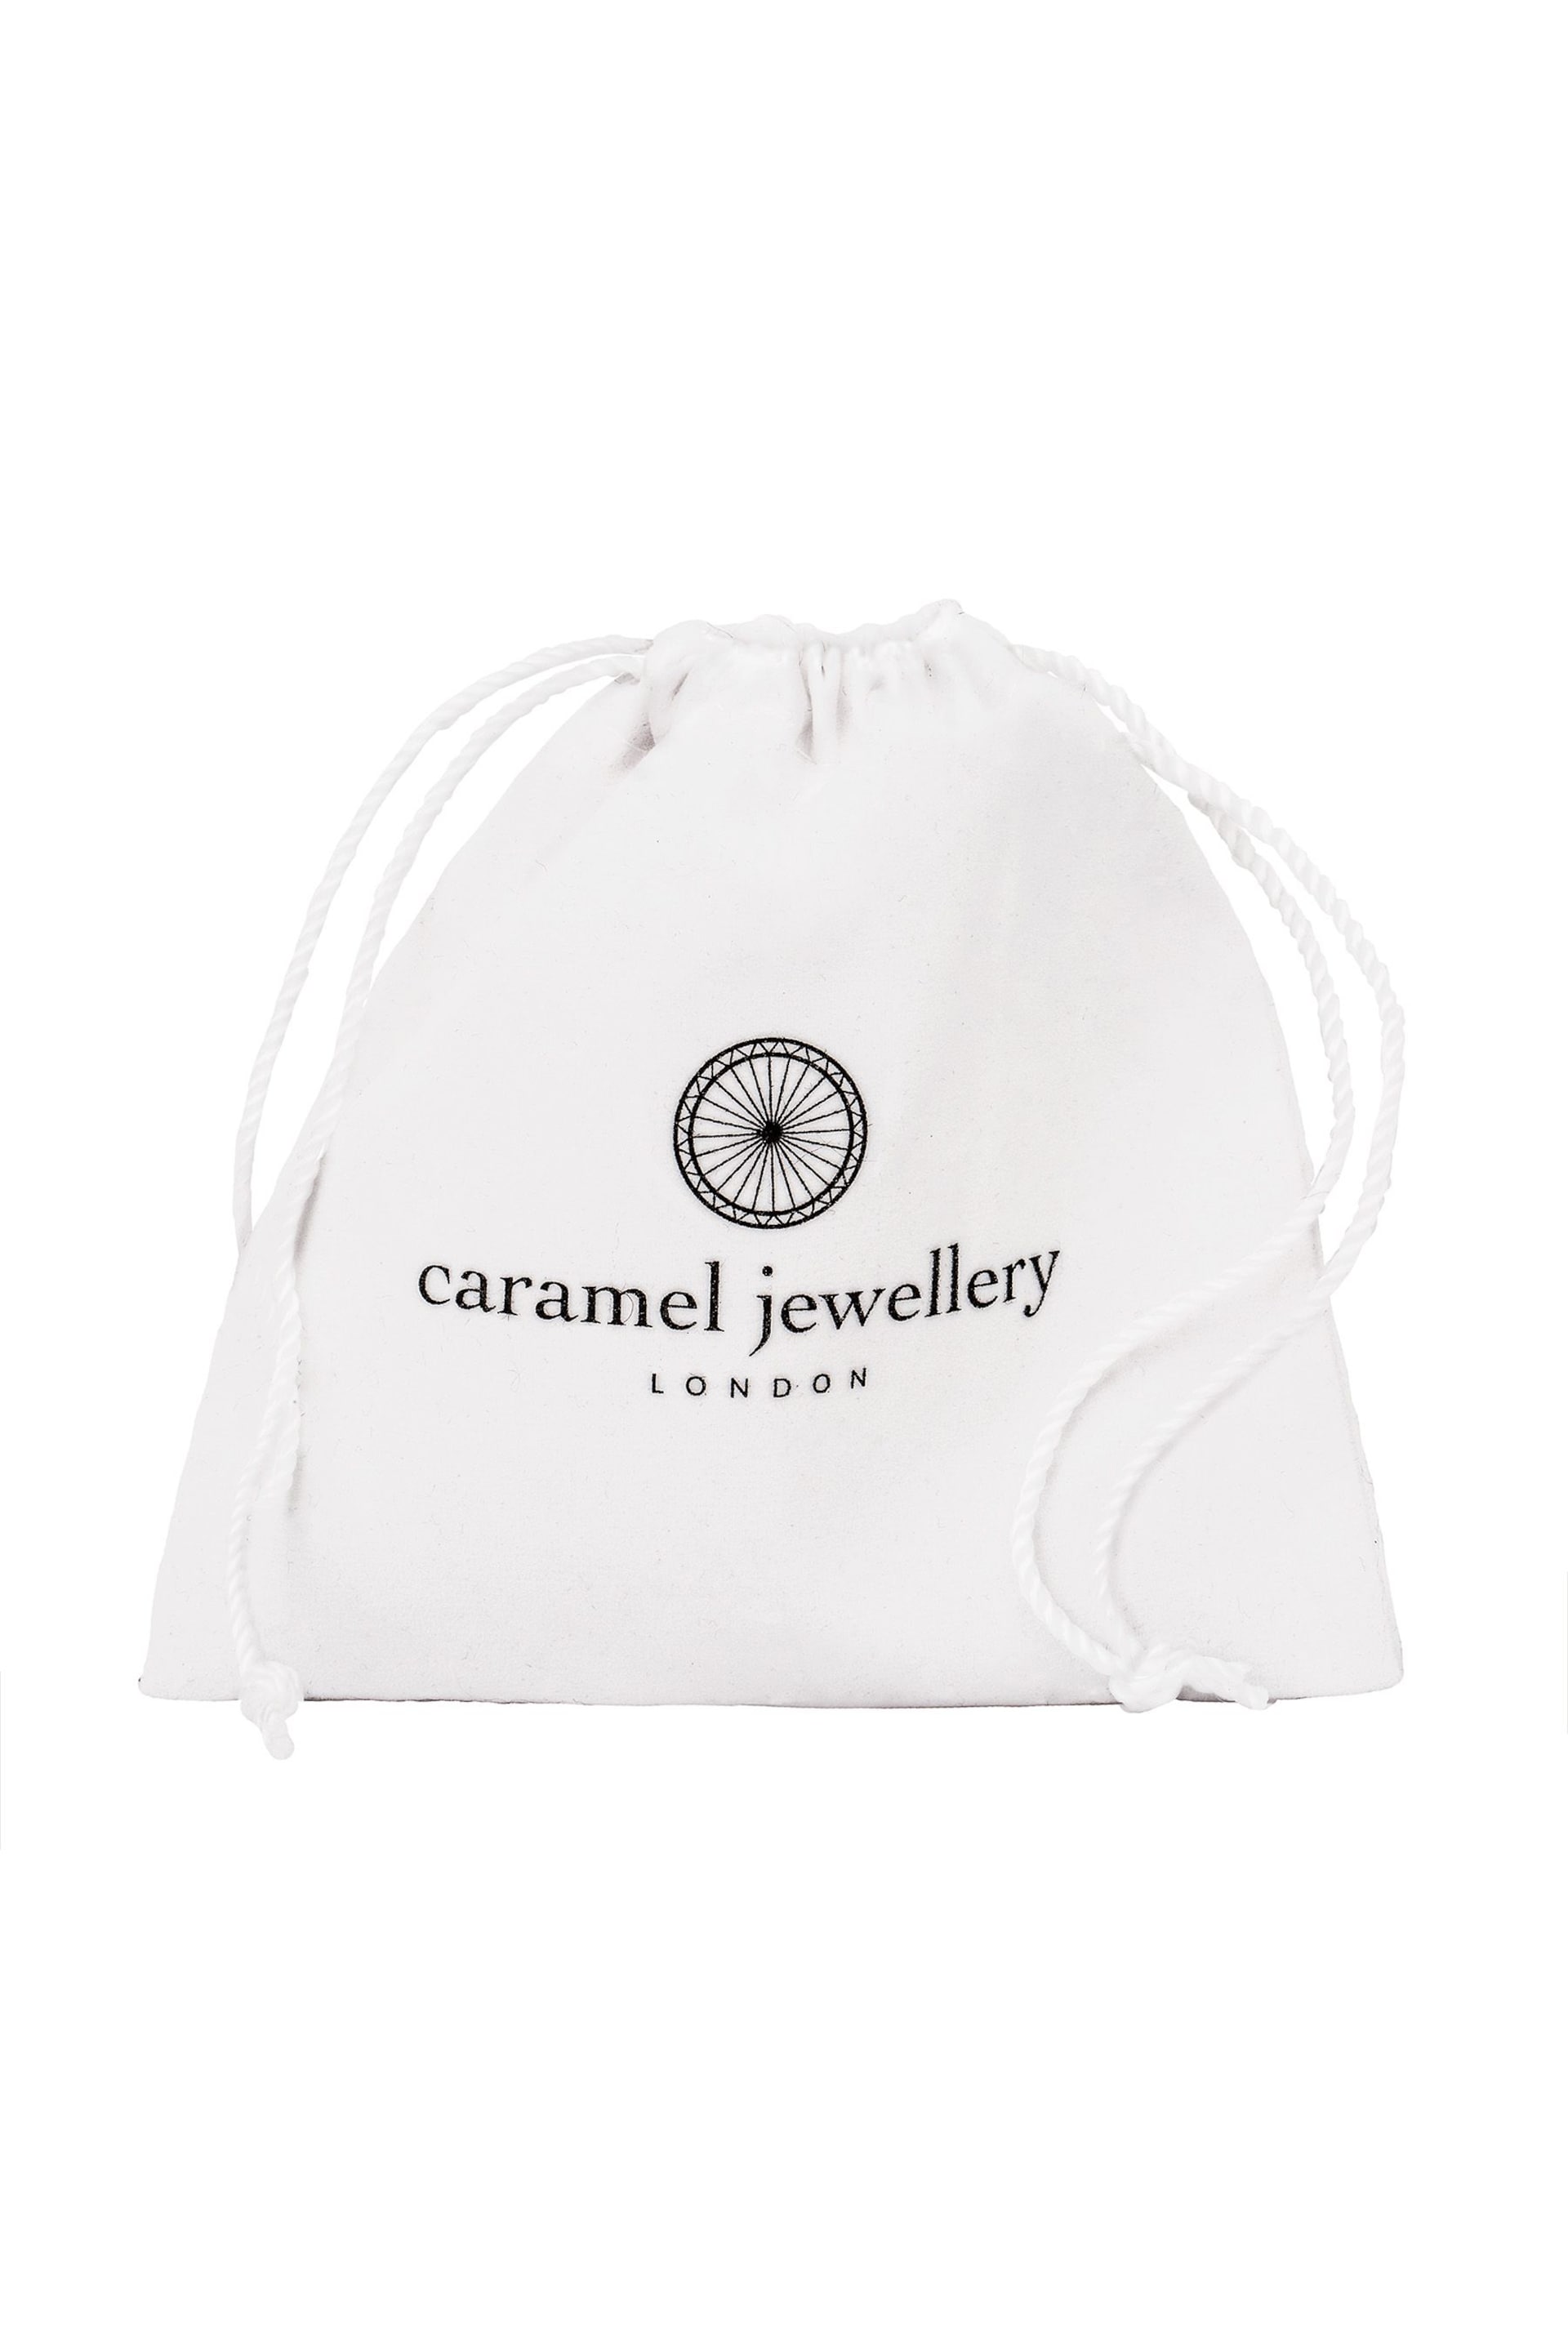 Caramel Jewellery London Silver 'Superstar' Bracelet - Image 4 of 4